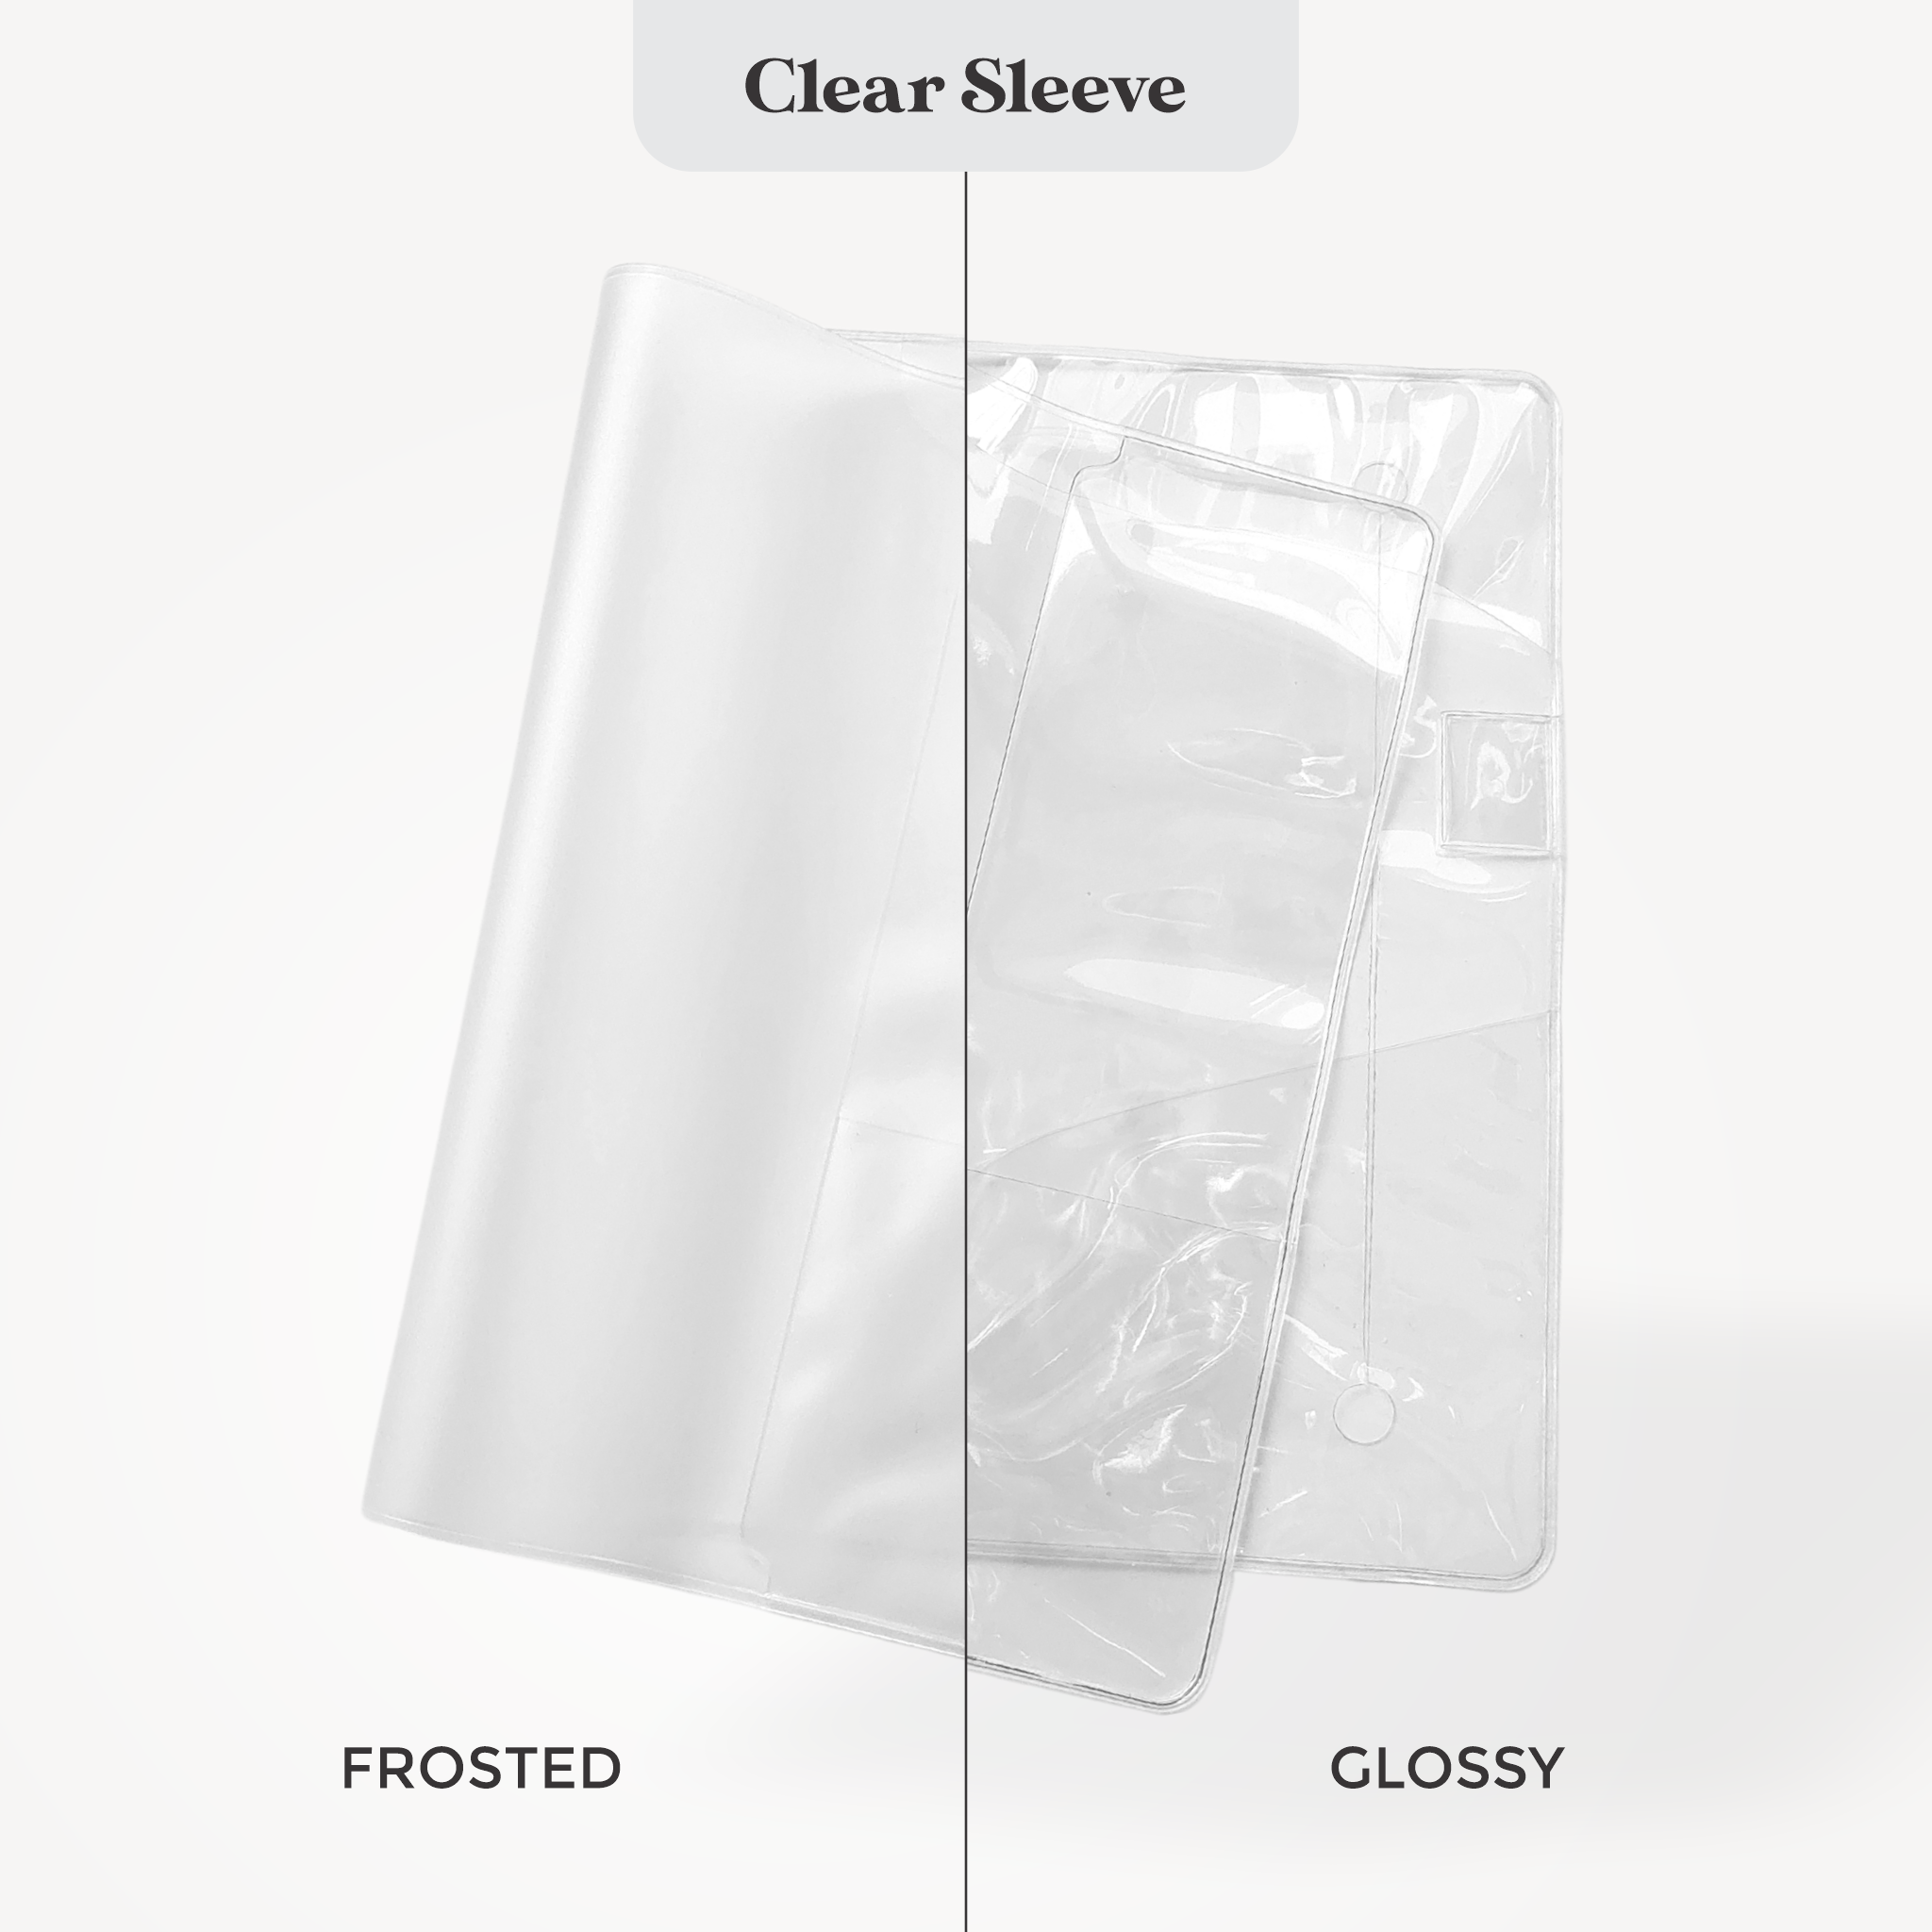 Glossy Clear Sleeve